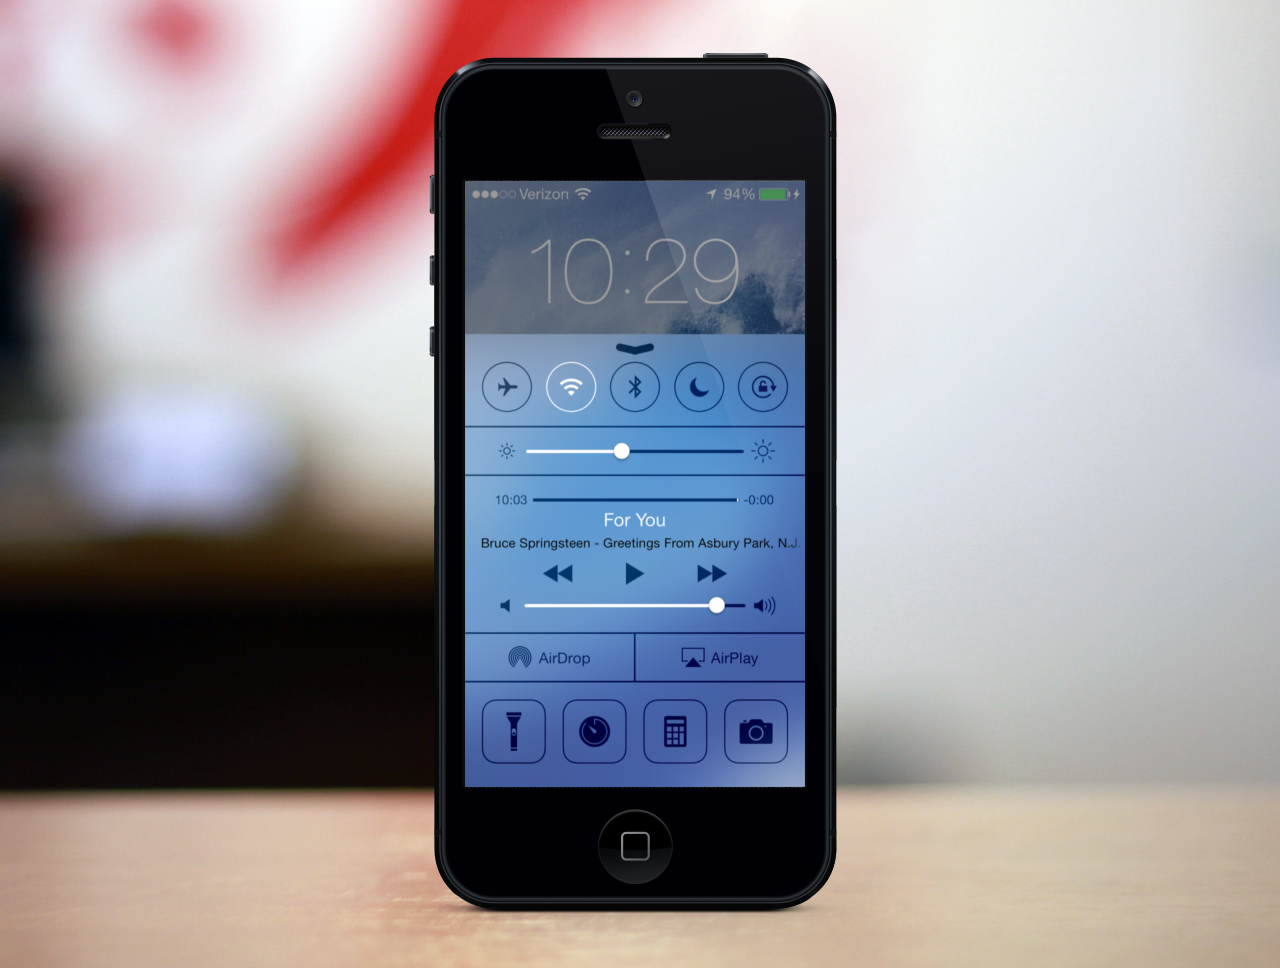 Control Panel in iOS 7